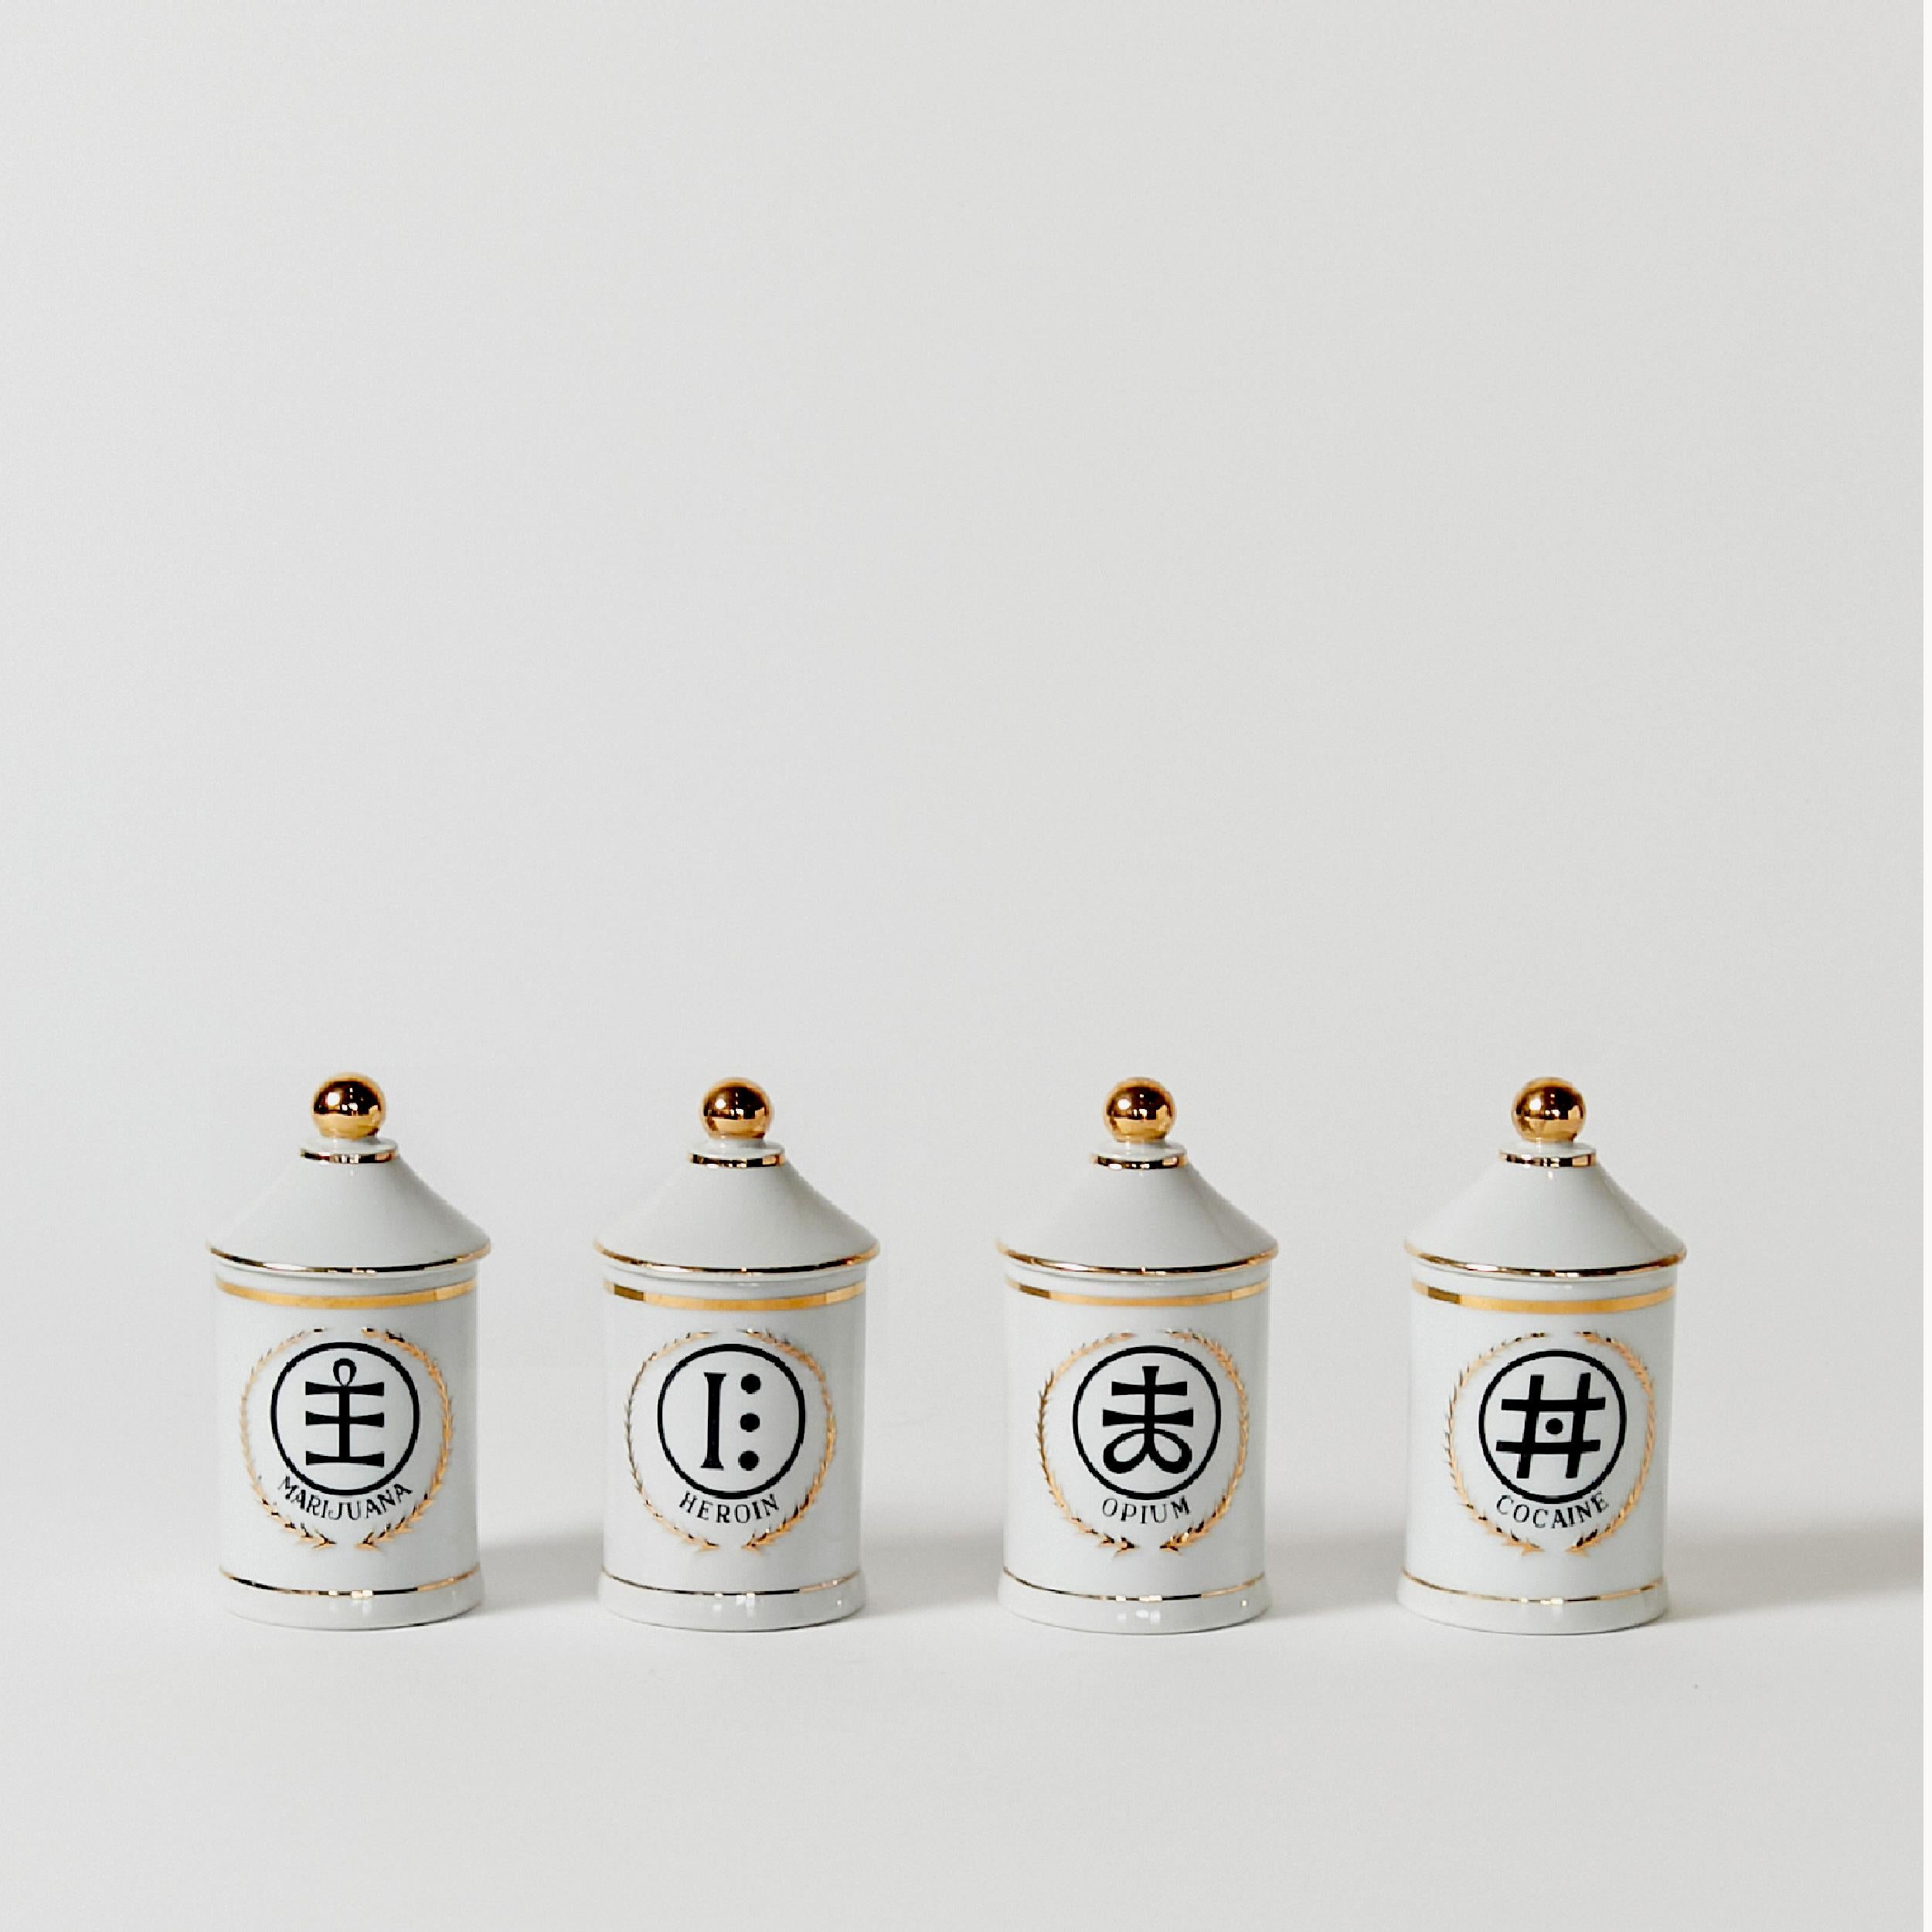 Rare set of four porcelain jars by LaGardo Tackett made in Japan.